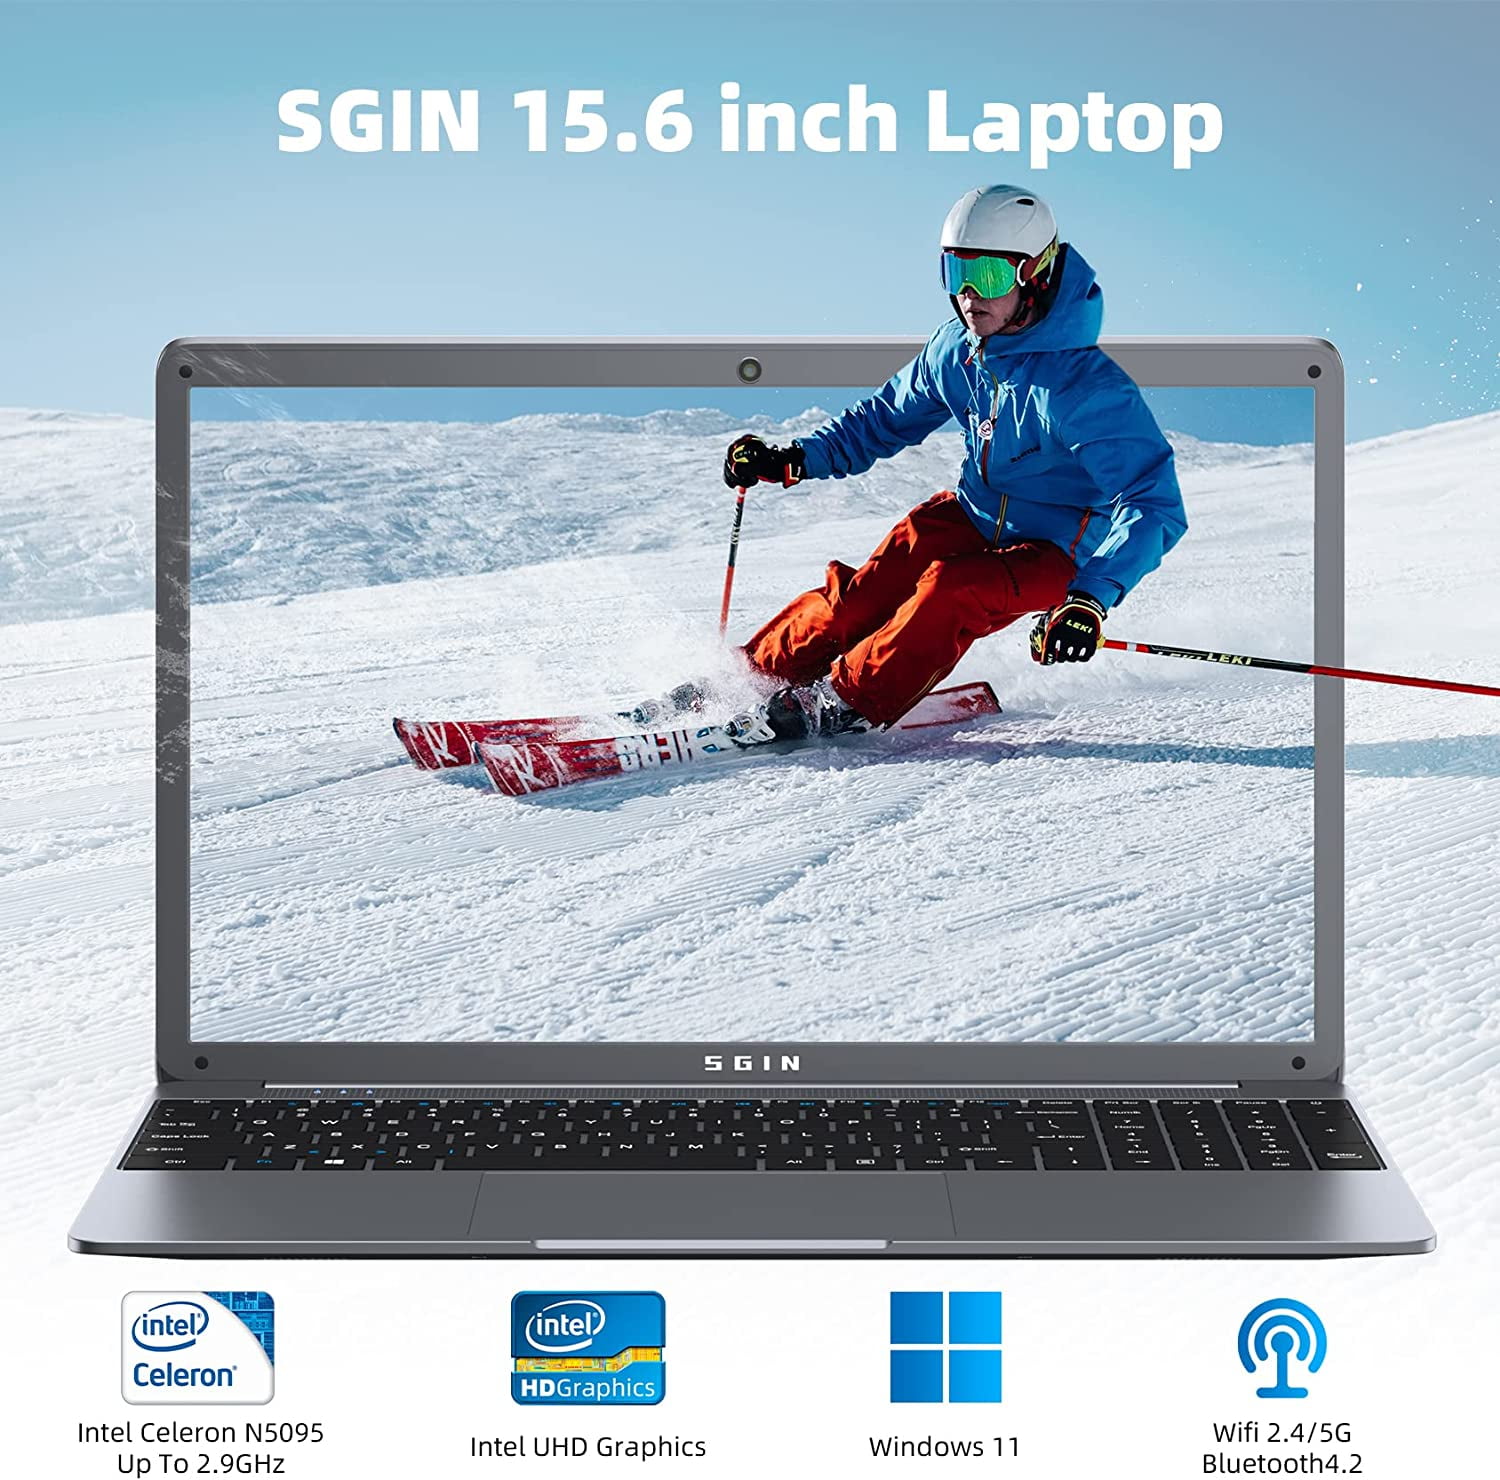 SGIN Laptop Review - 15.6 Inch Laptop